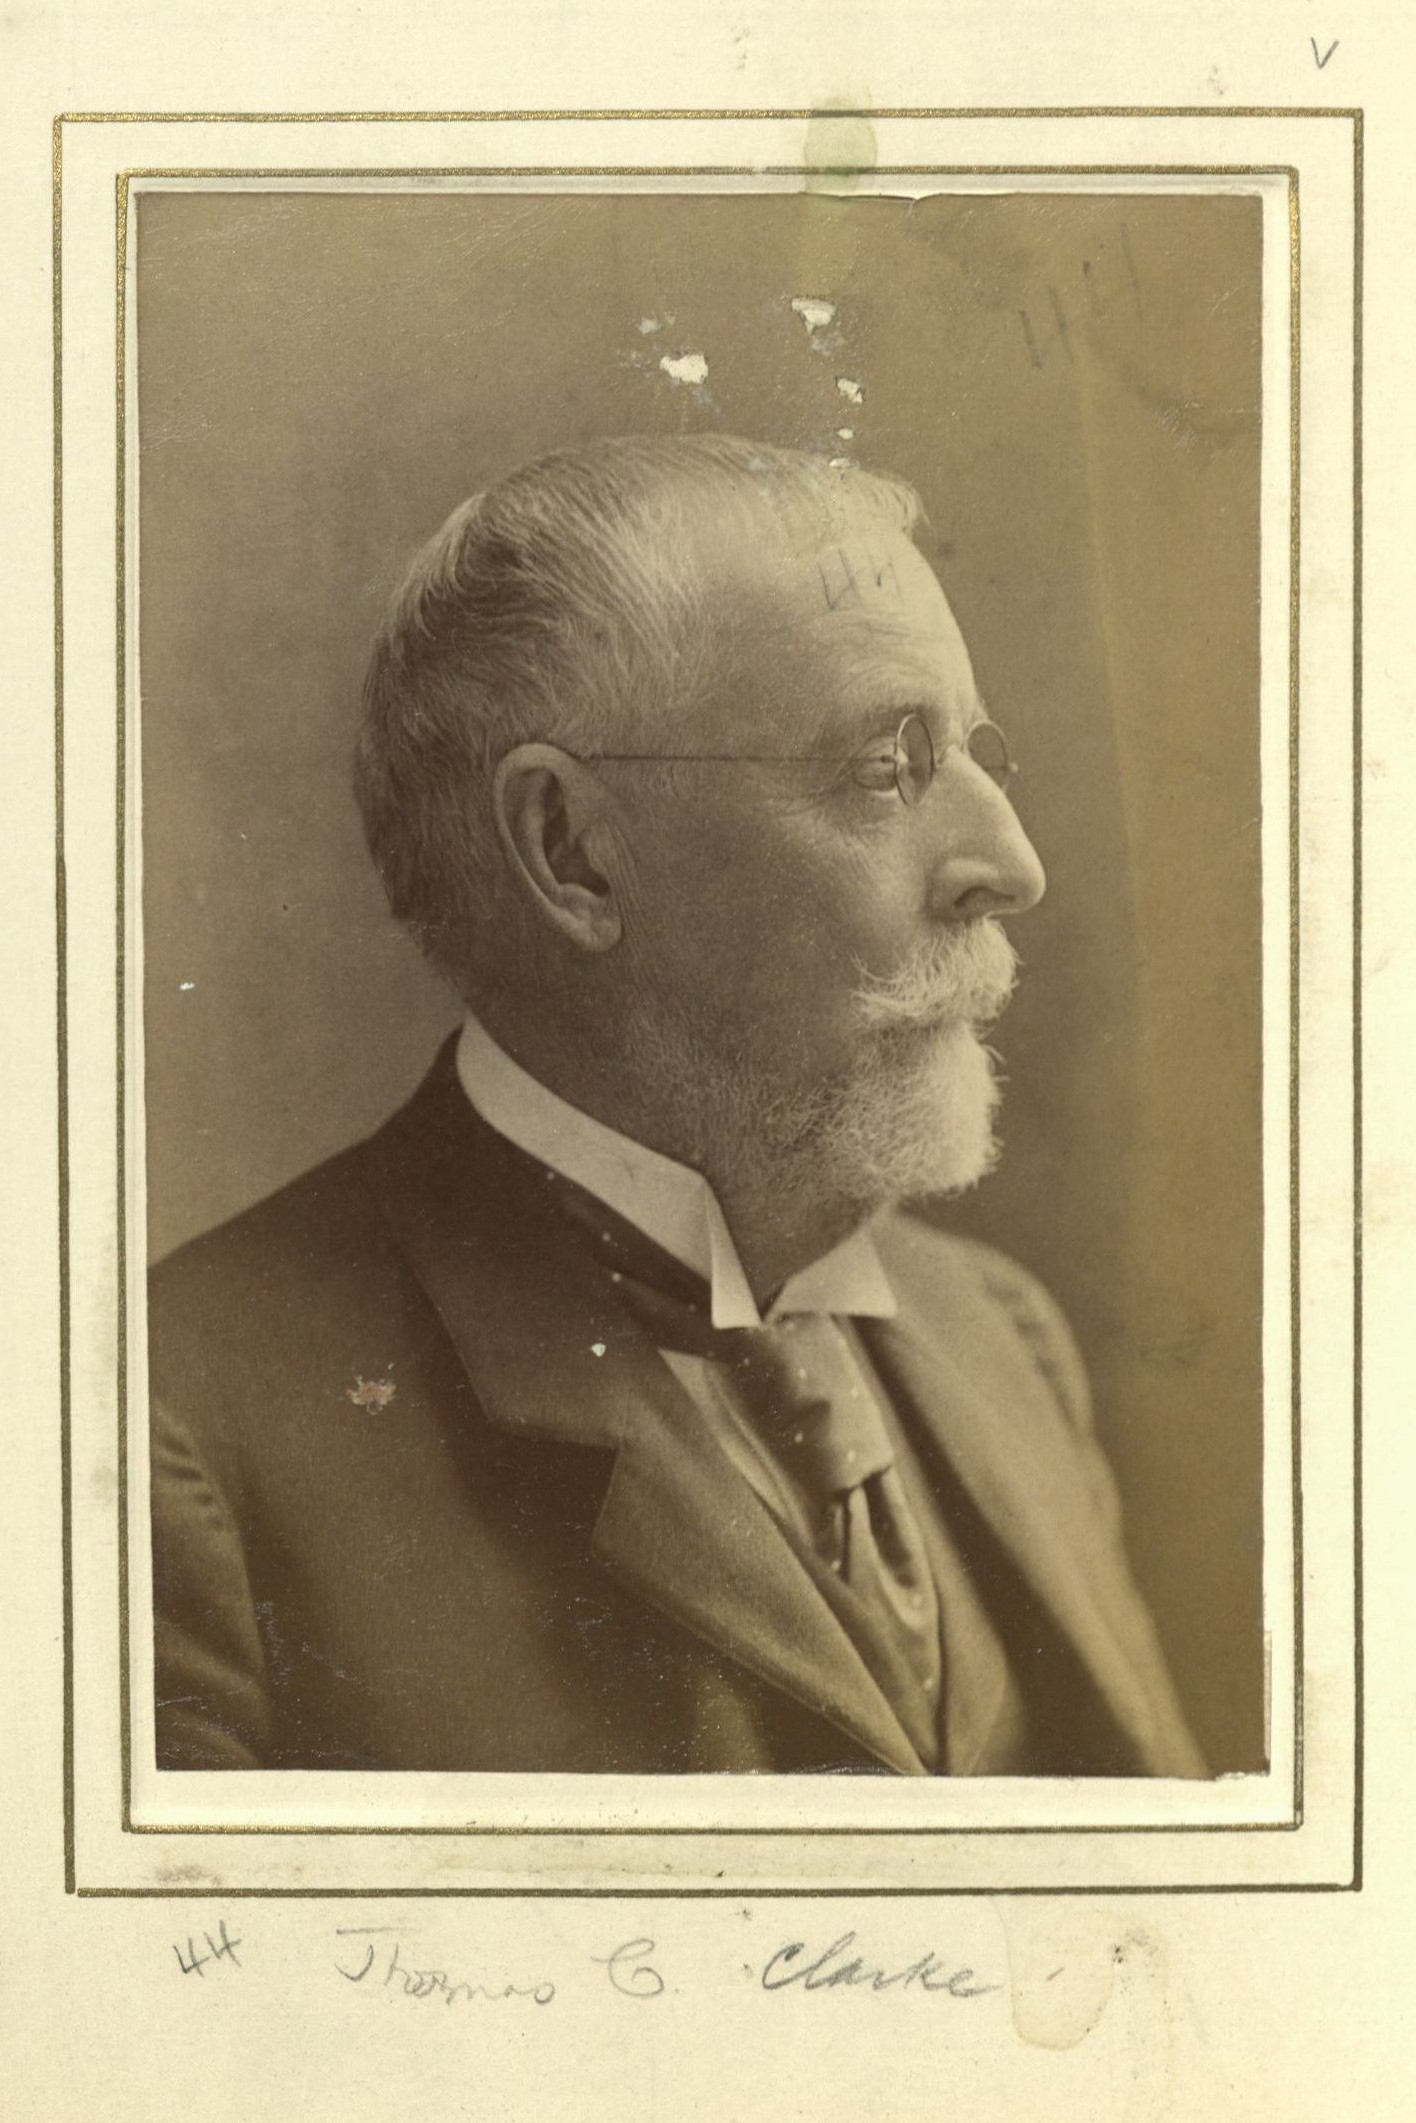 Member portrait of Thomas C. Clarke